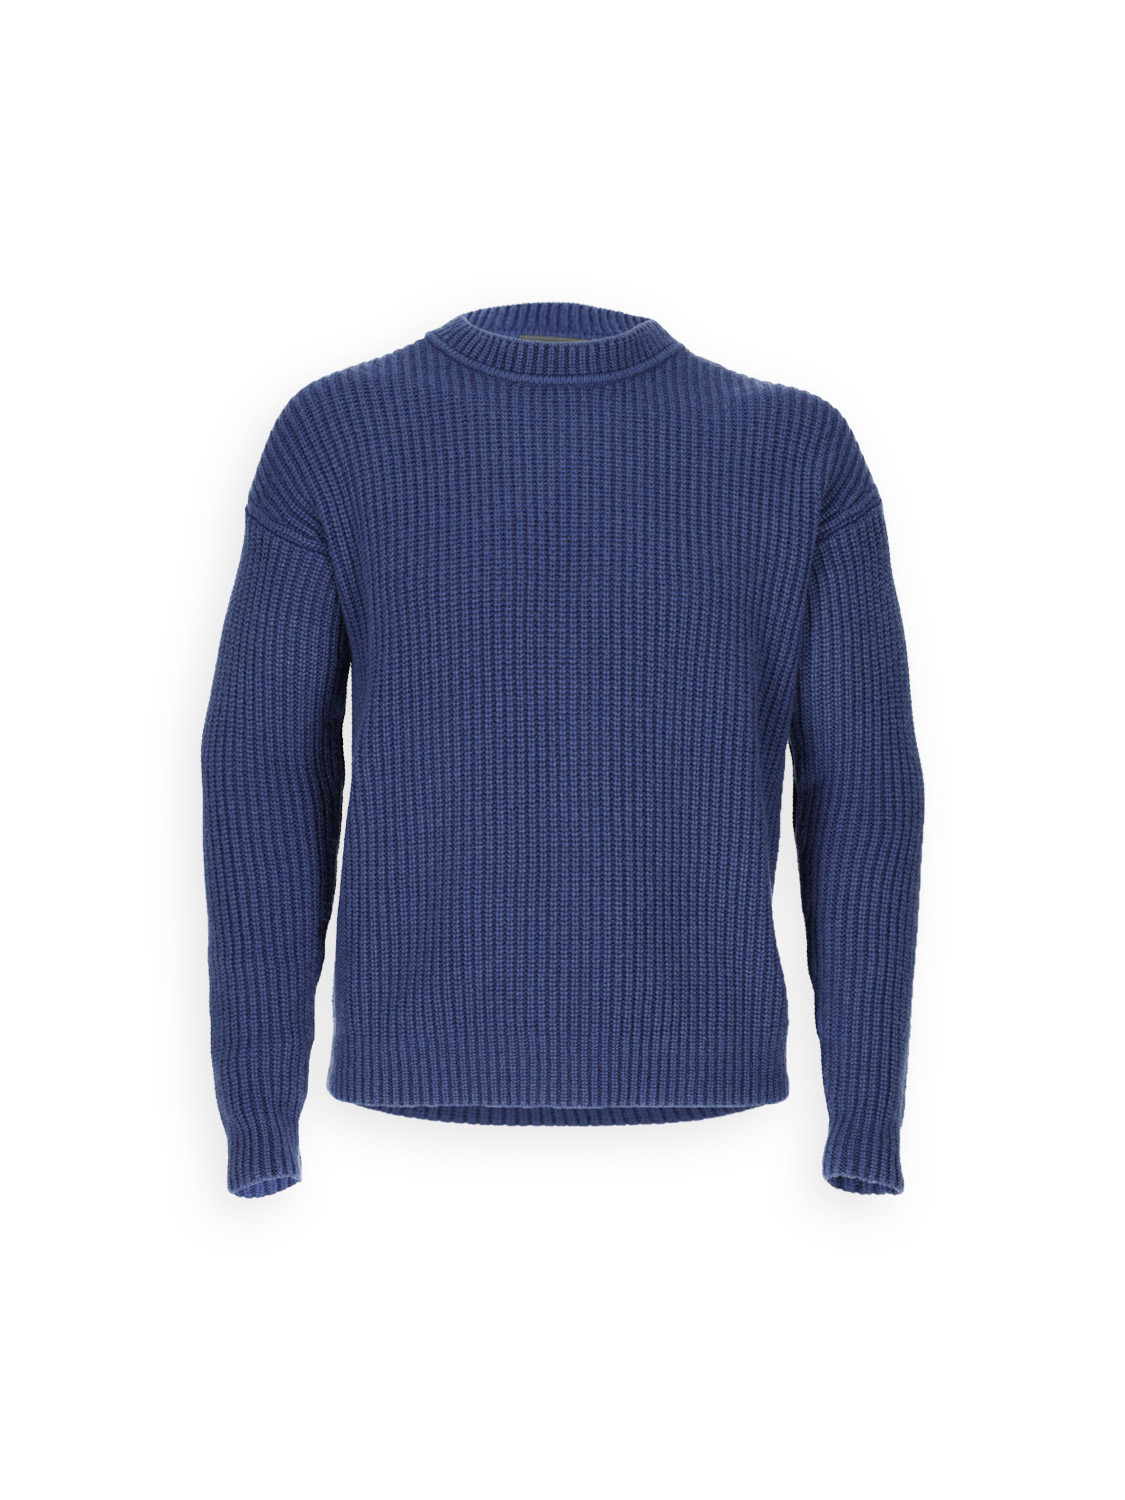 Adriano - cashmere knit sweater 